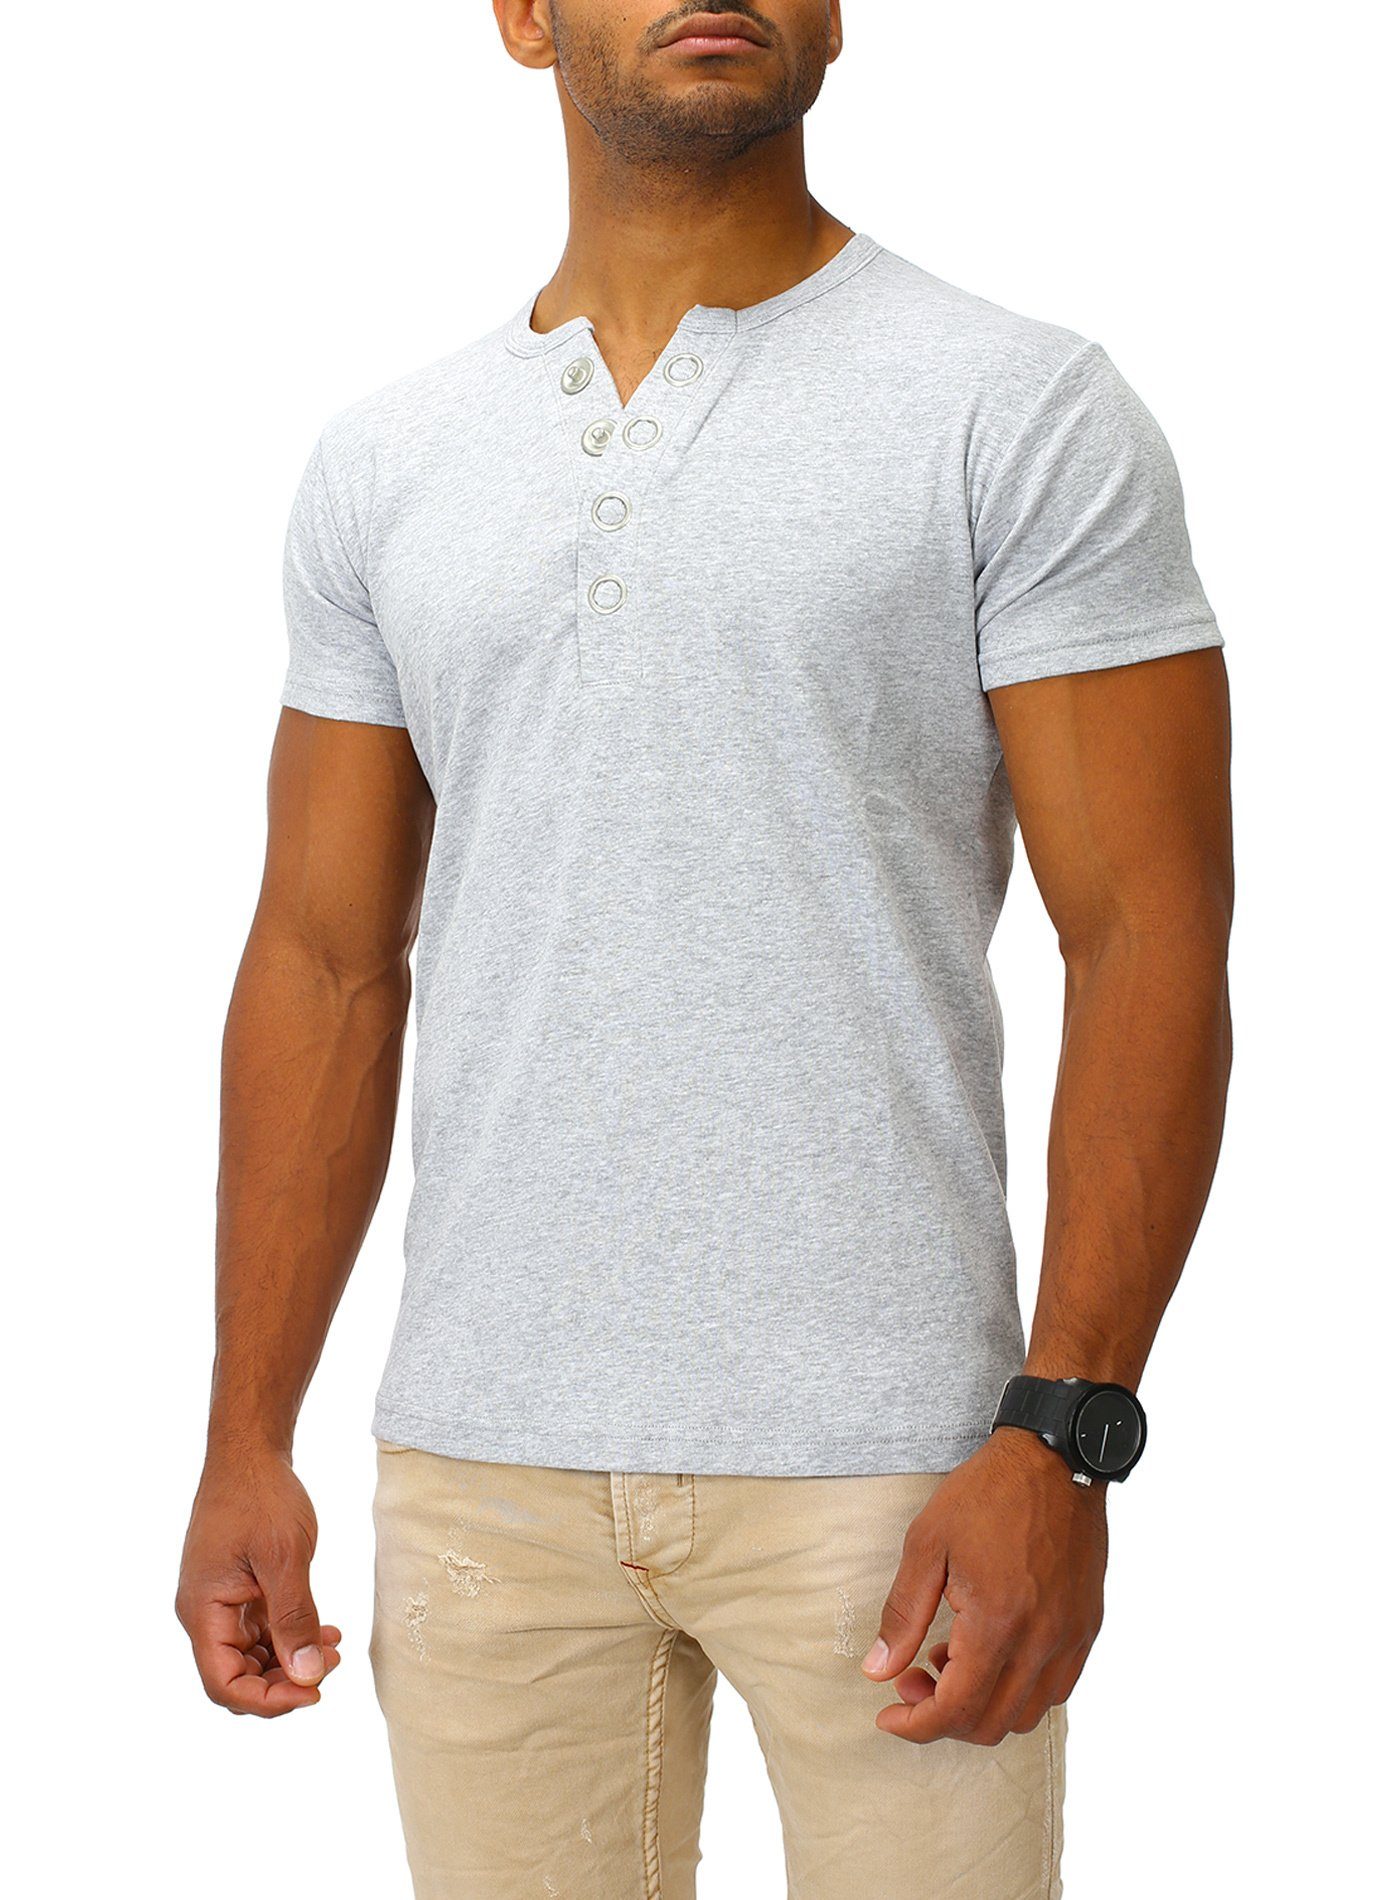 Joe Franks T-Shirt Big Slim grey Fit melange Button stylischem in